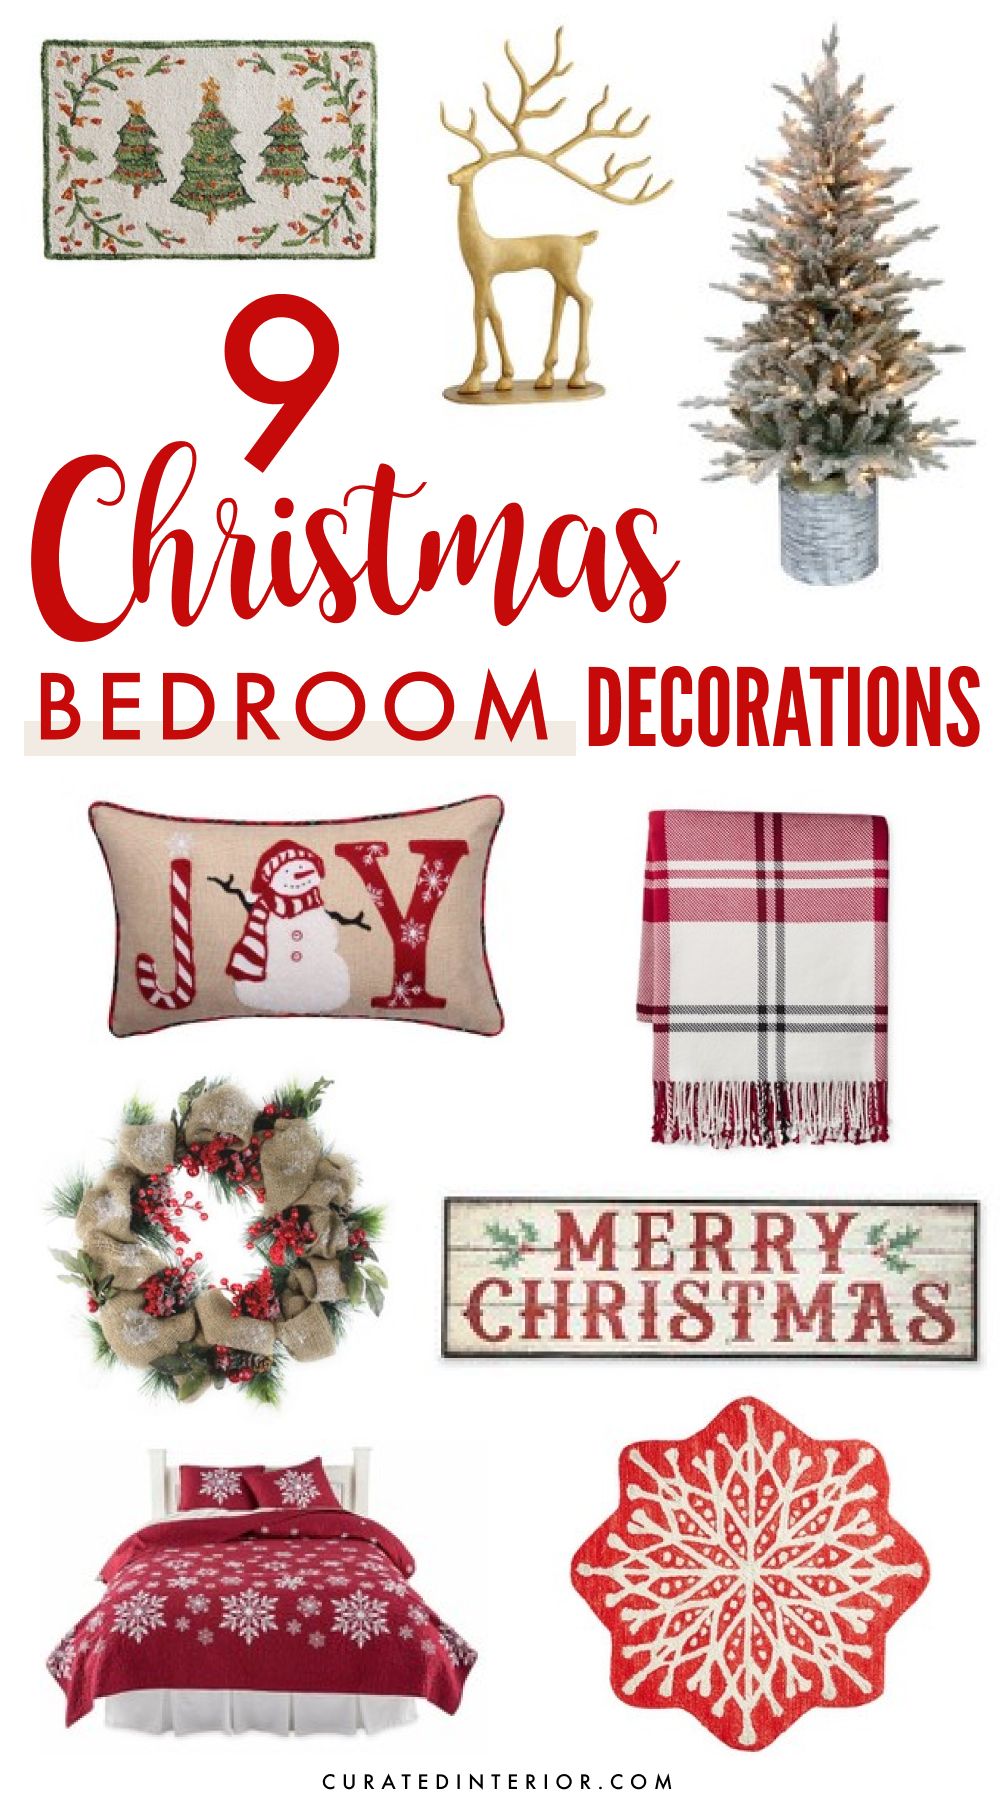 9 Christmas Bedroom Decorations